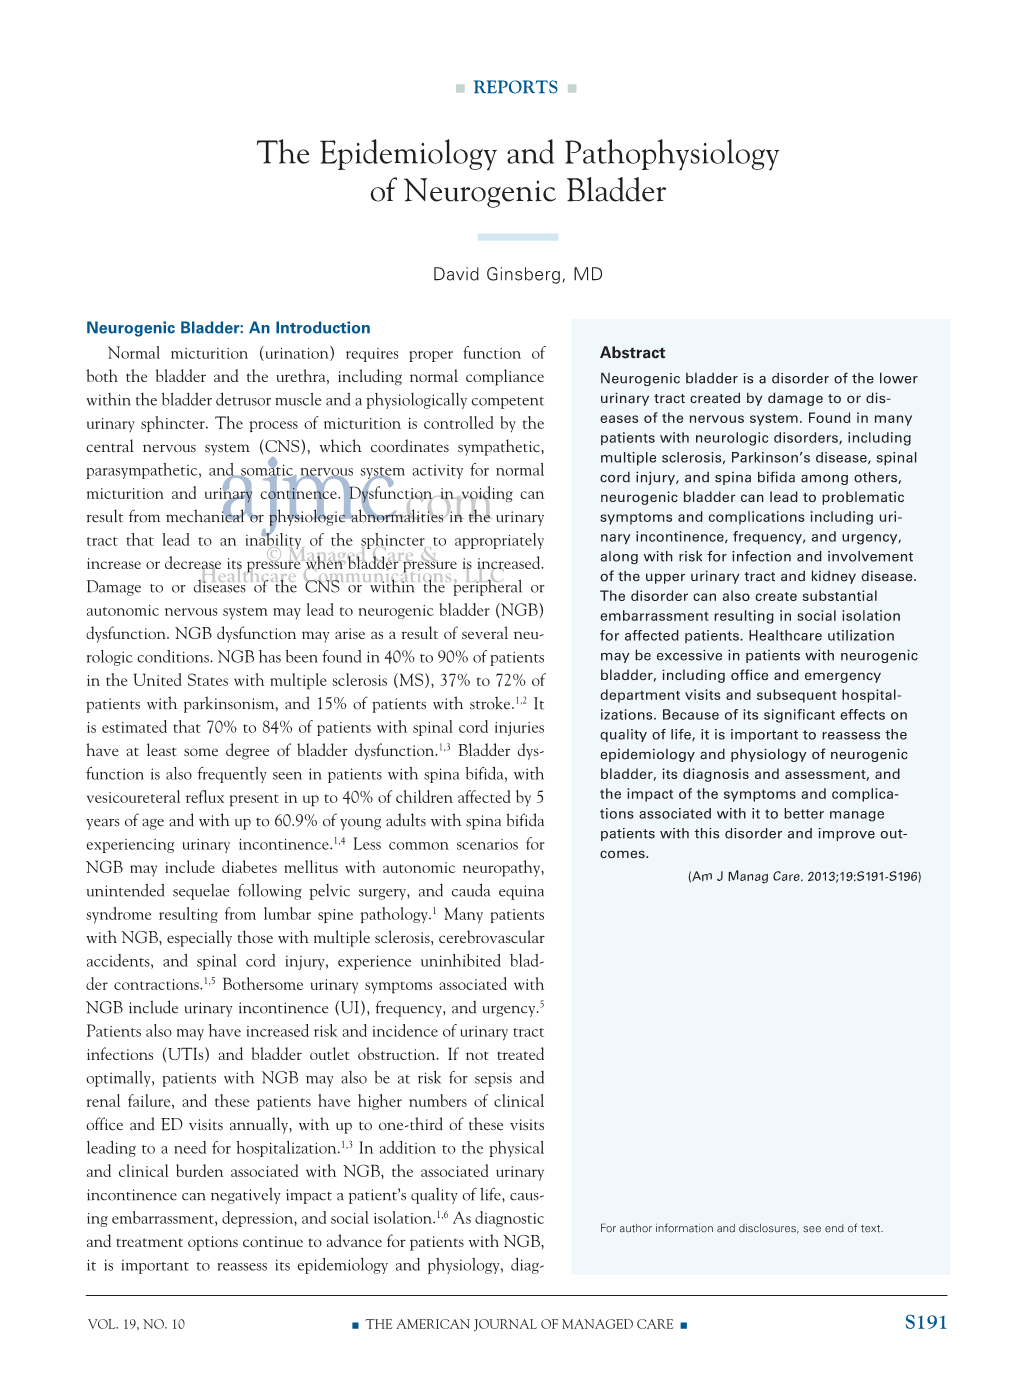 The Epidemiology and Pathophysiology of Neurogenic Bladder